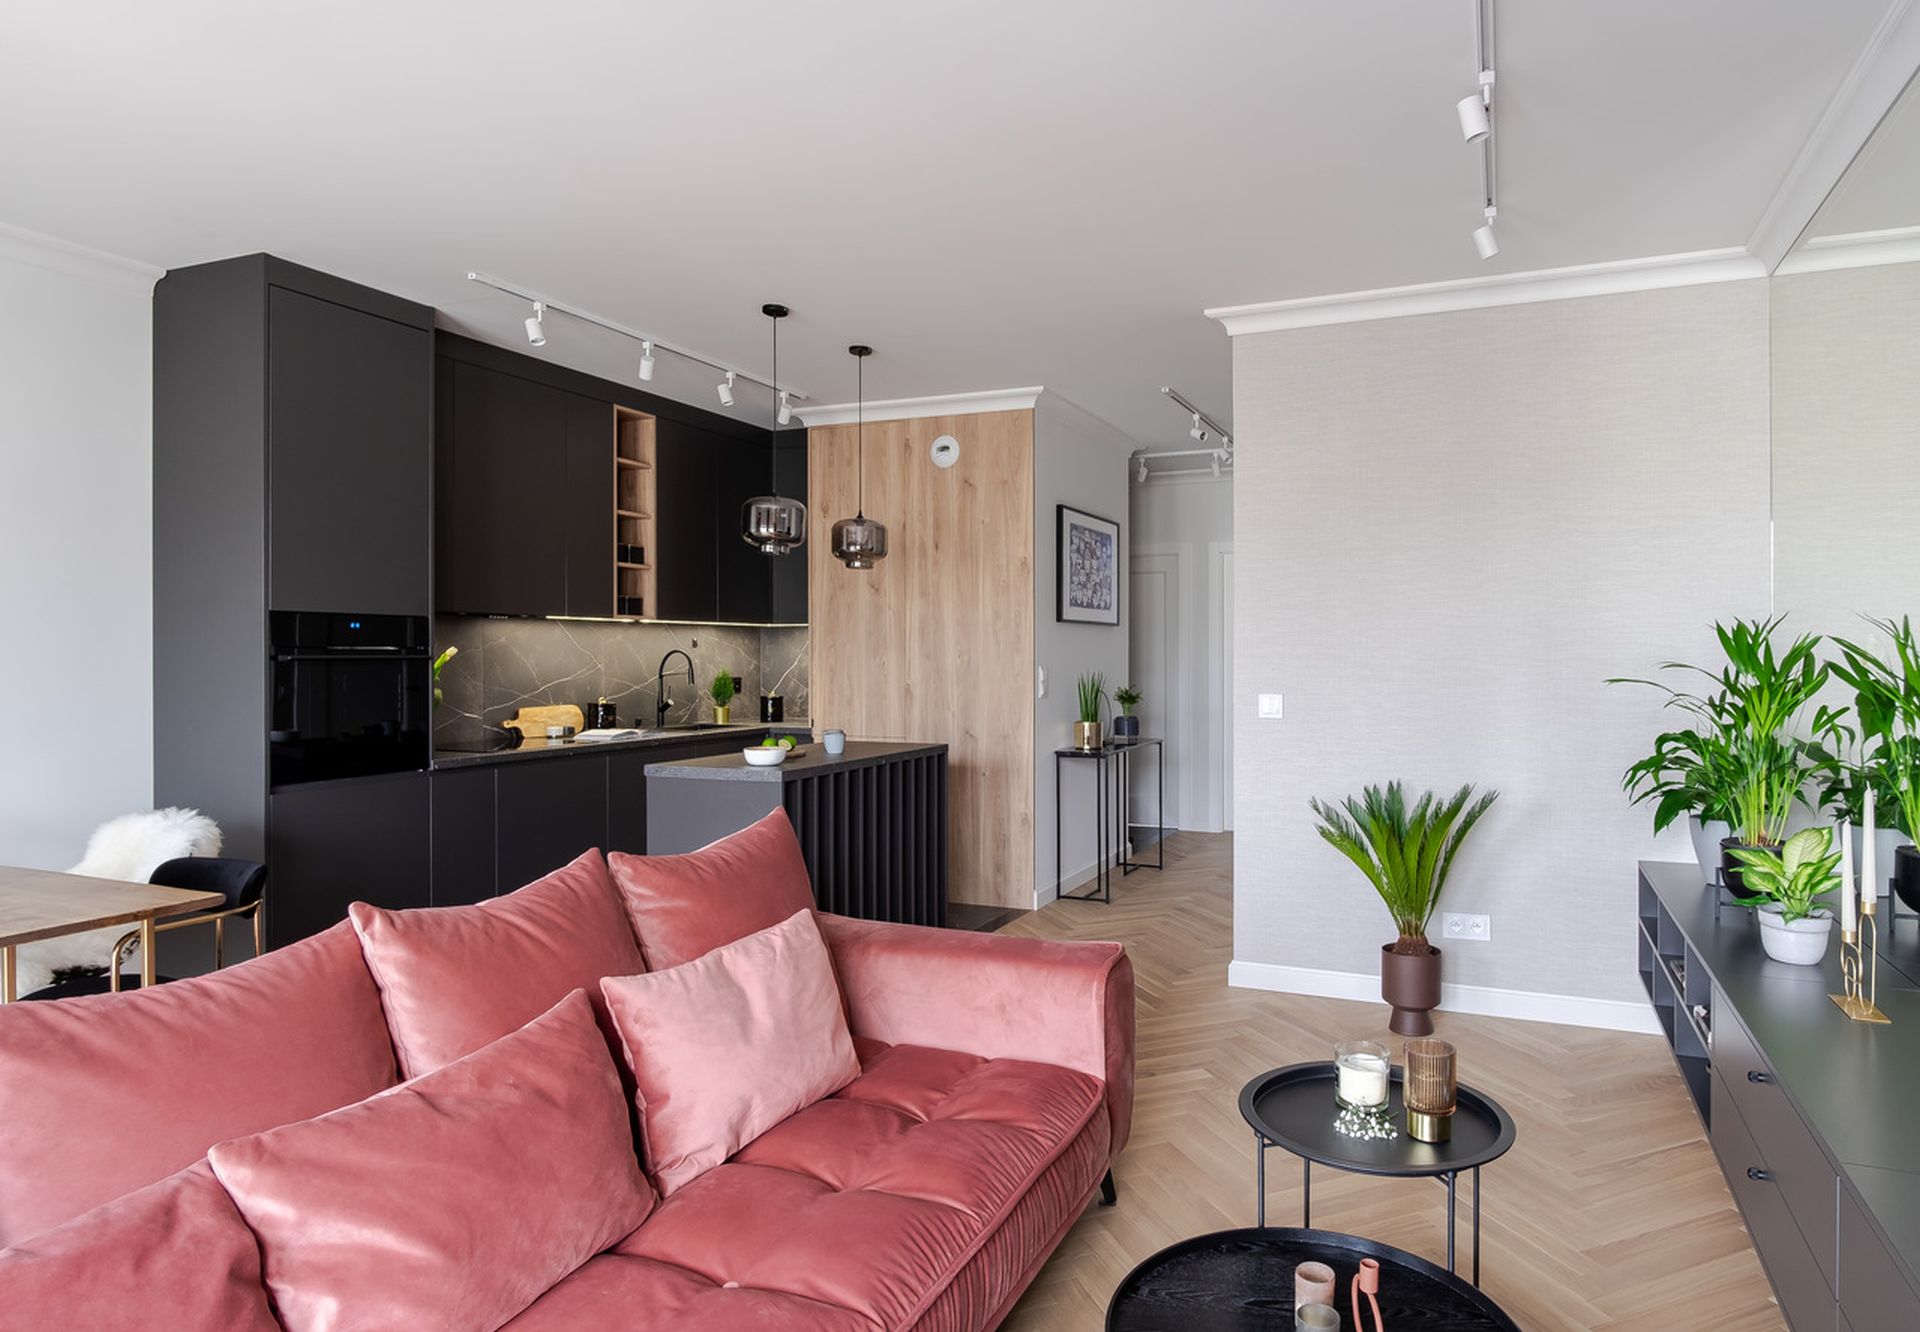 Salon i kuchnia w mieszkaniu w stylu modern classic. Projekt wnętrza: latreDesign. Fot. Bernadetta Kuczyńska